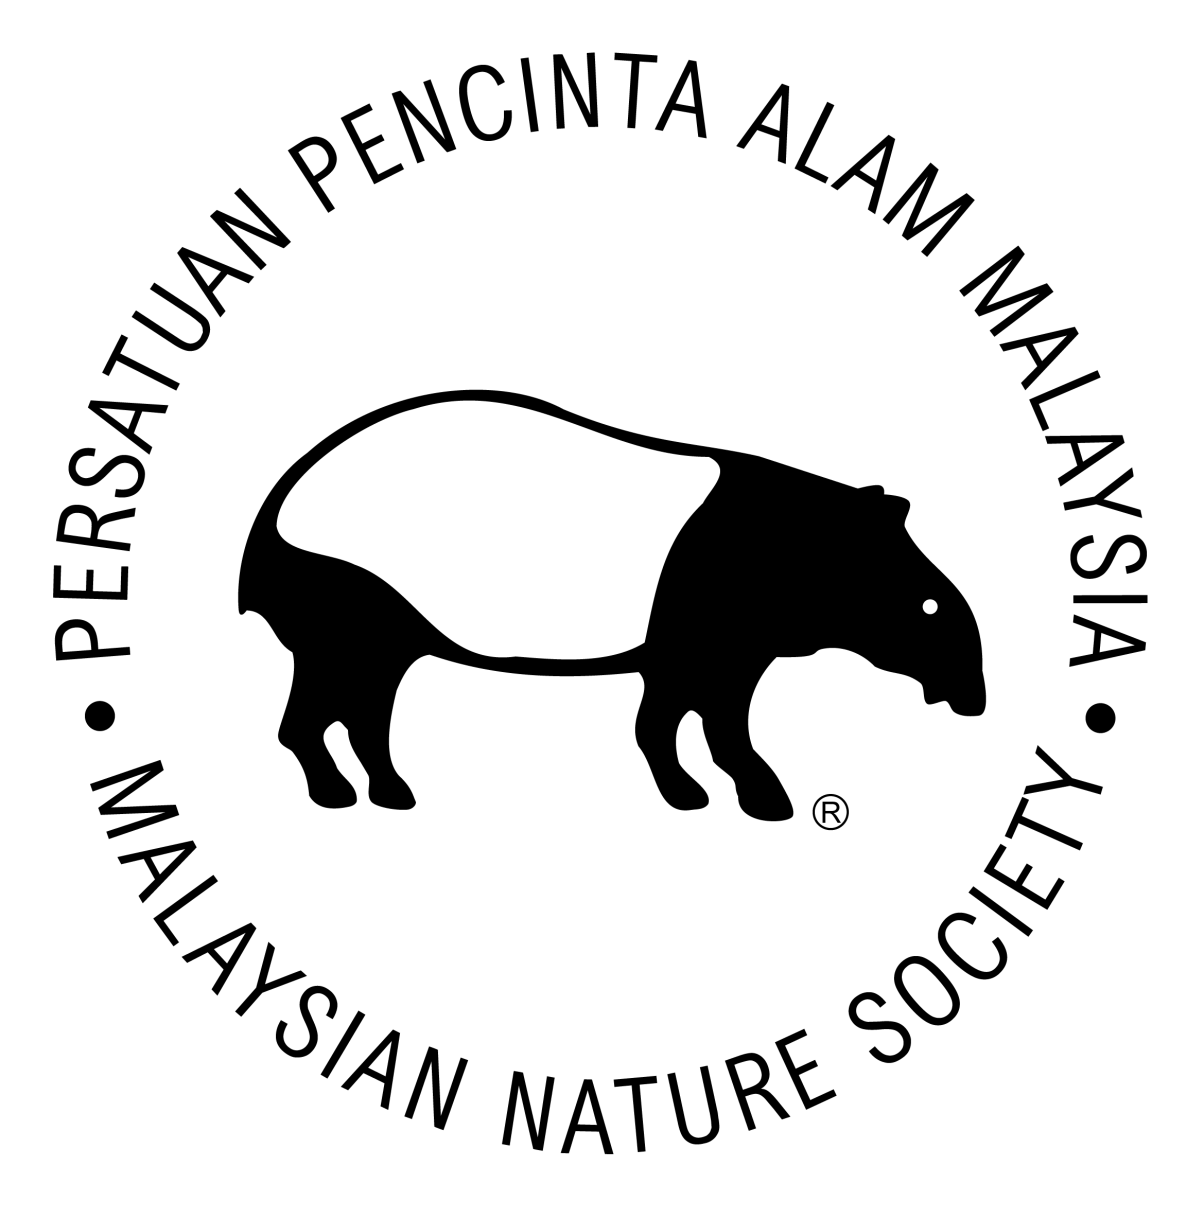 Malaysian Nature Society Wikipedia